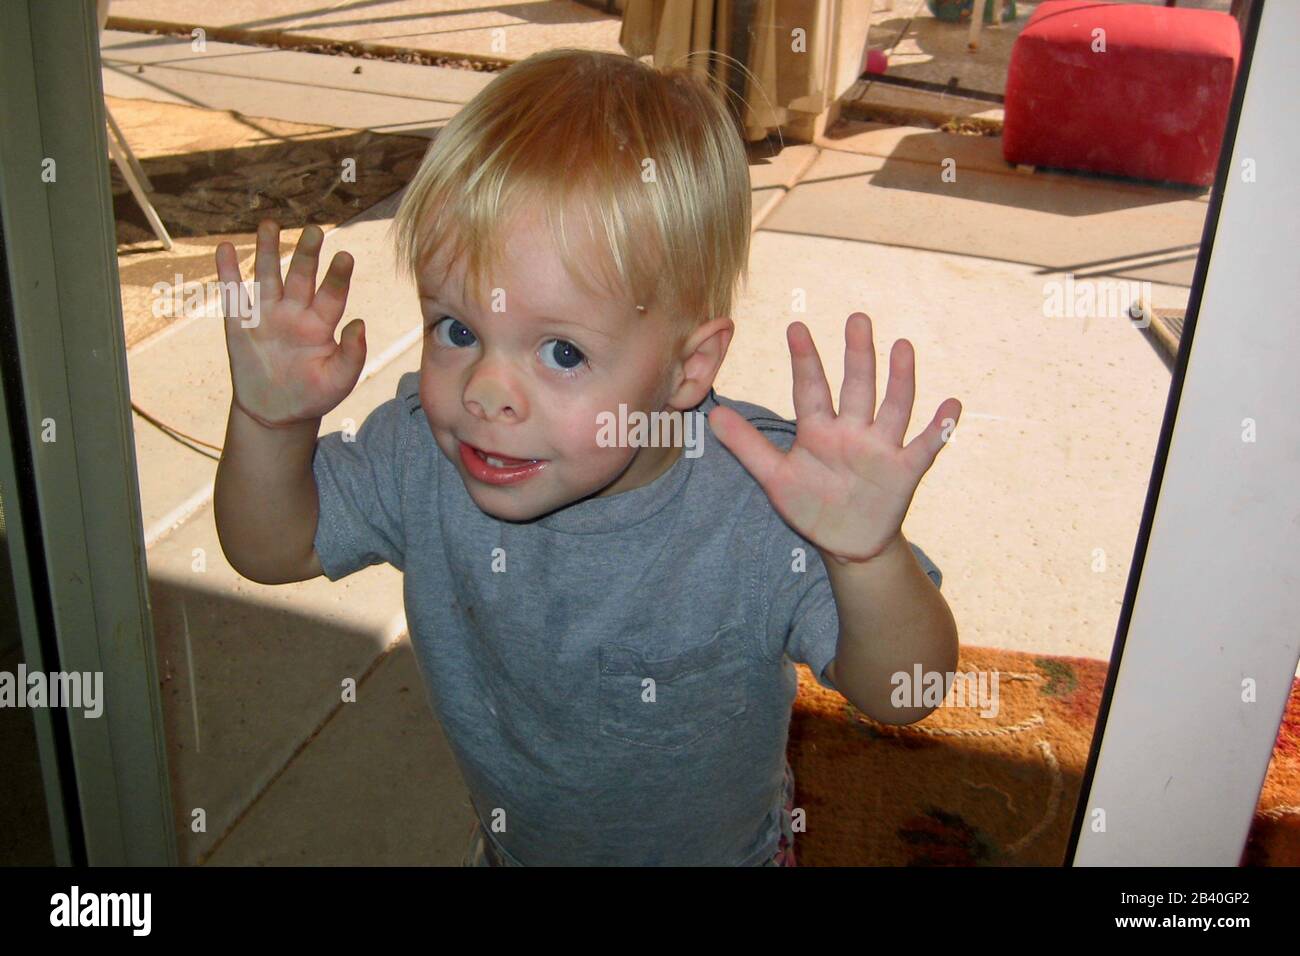 A little boy smushes his face into a sliding glass door. Stock Photo